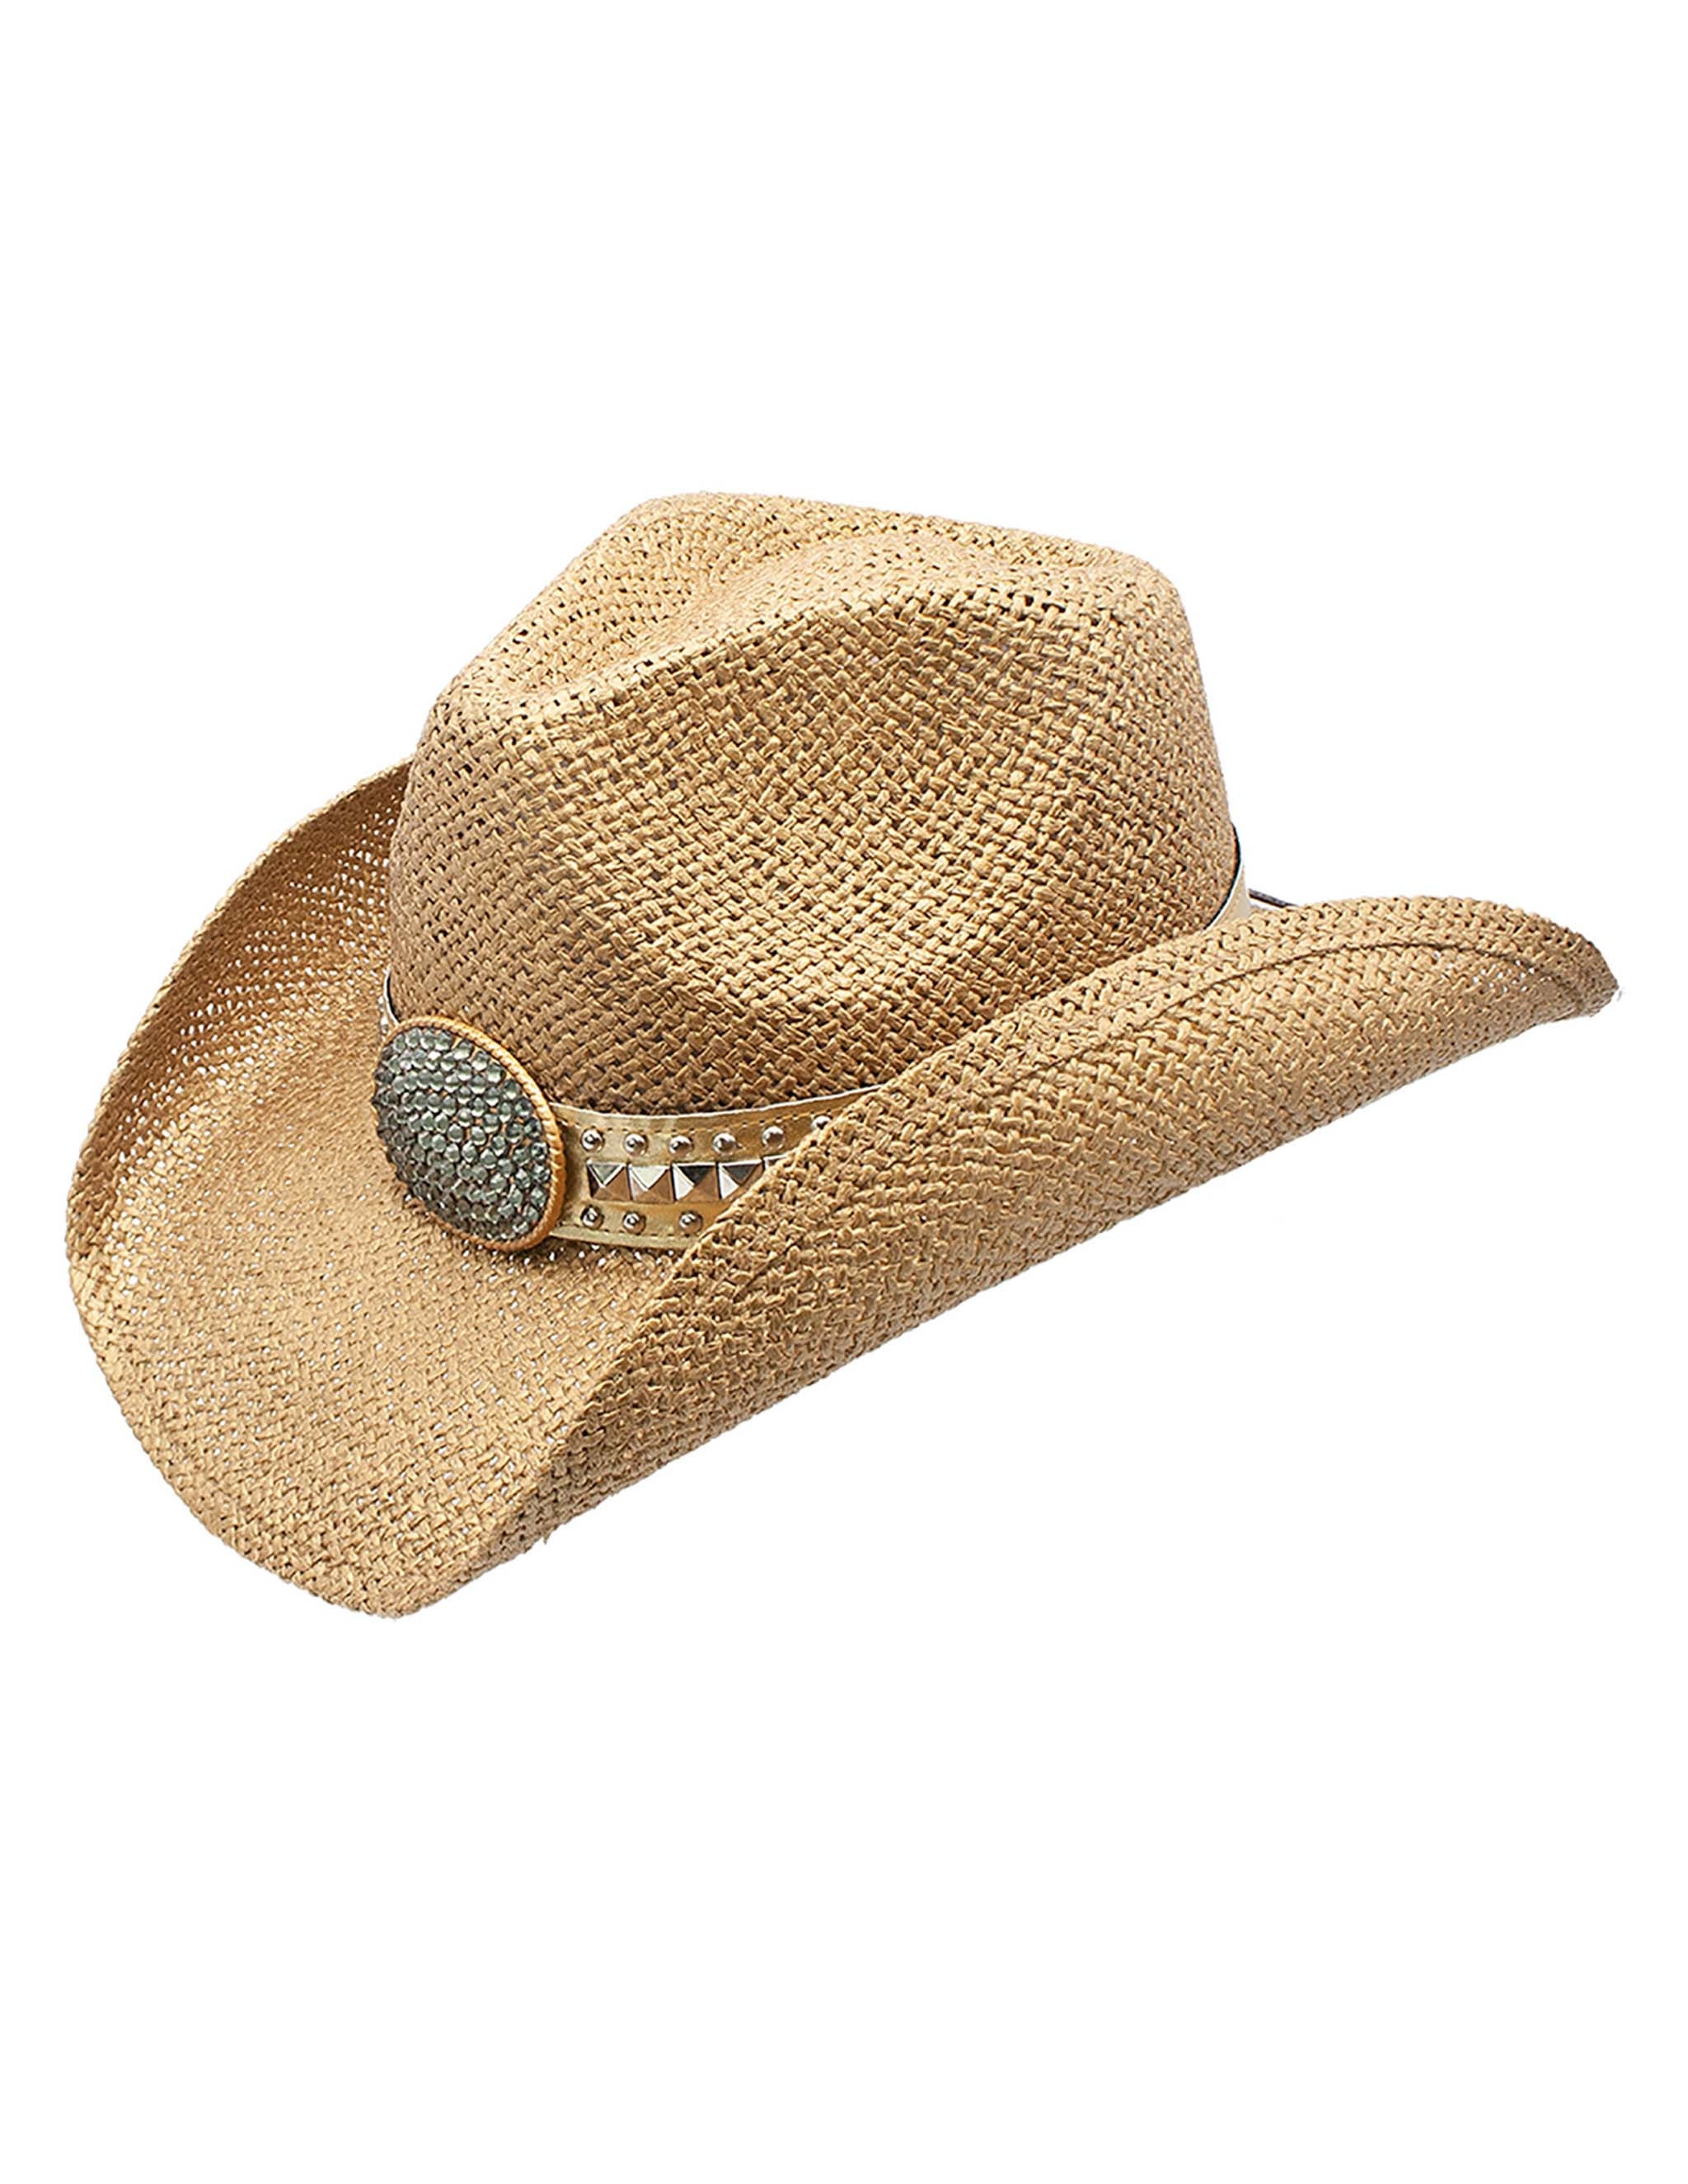 Gila Gold Cowboy Hat